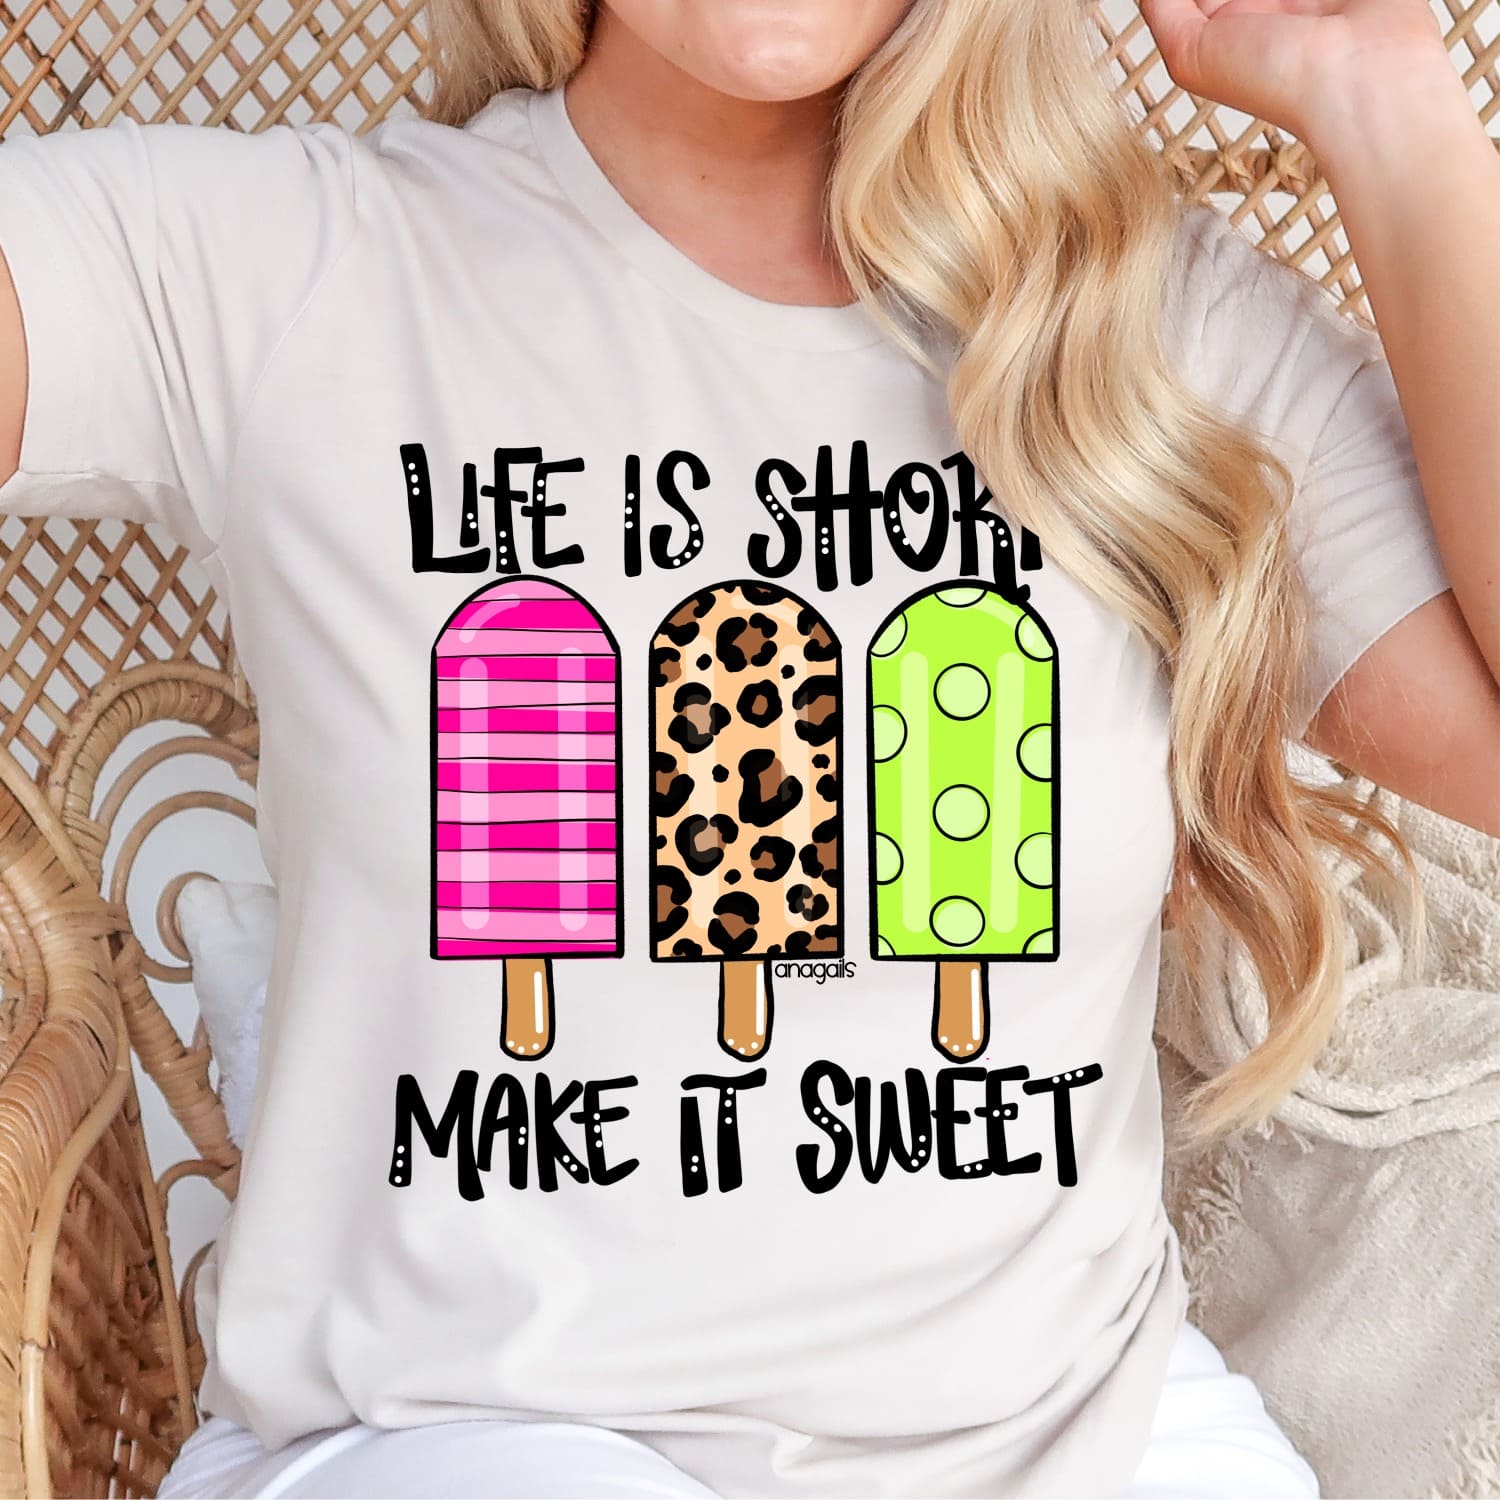 Life is short, make it sweet - Ice cream T-shirt, sweet ice cream